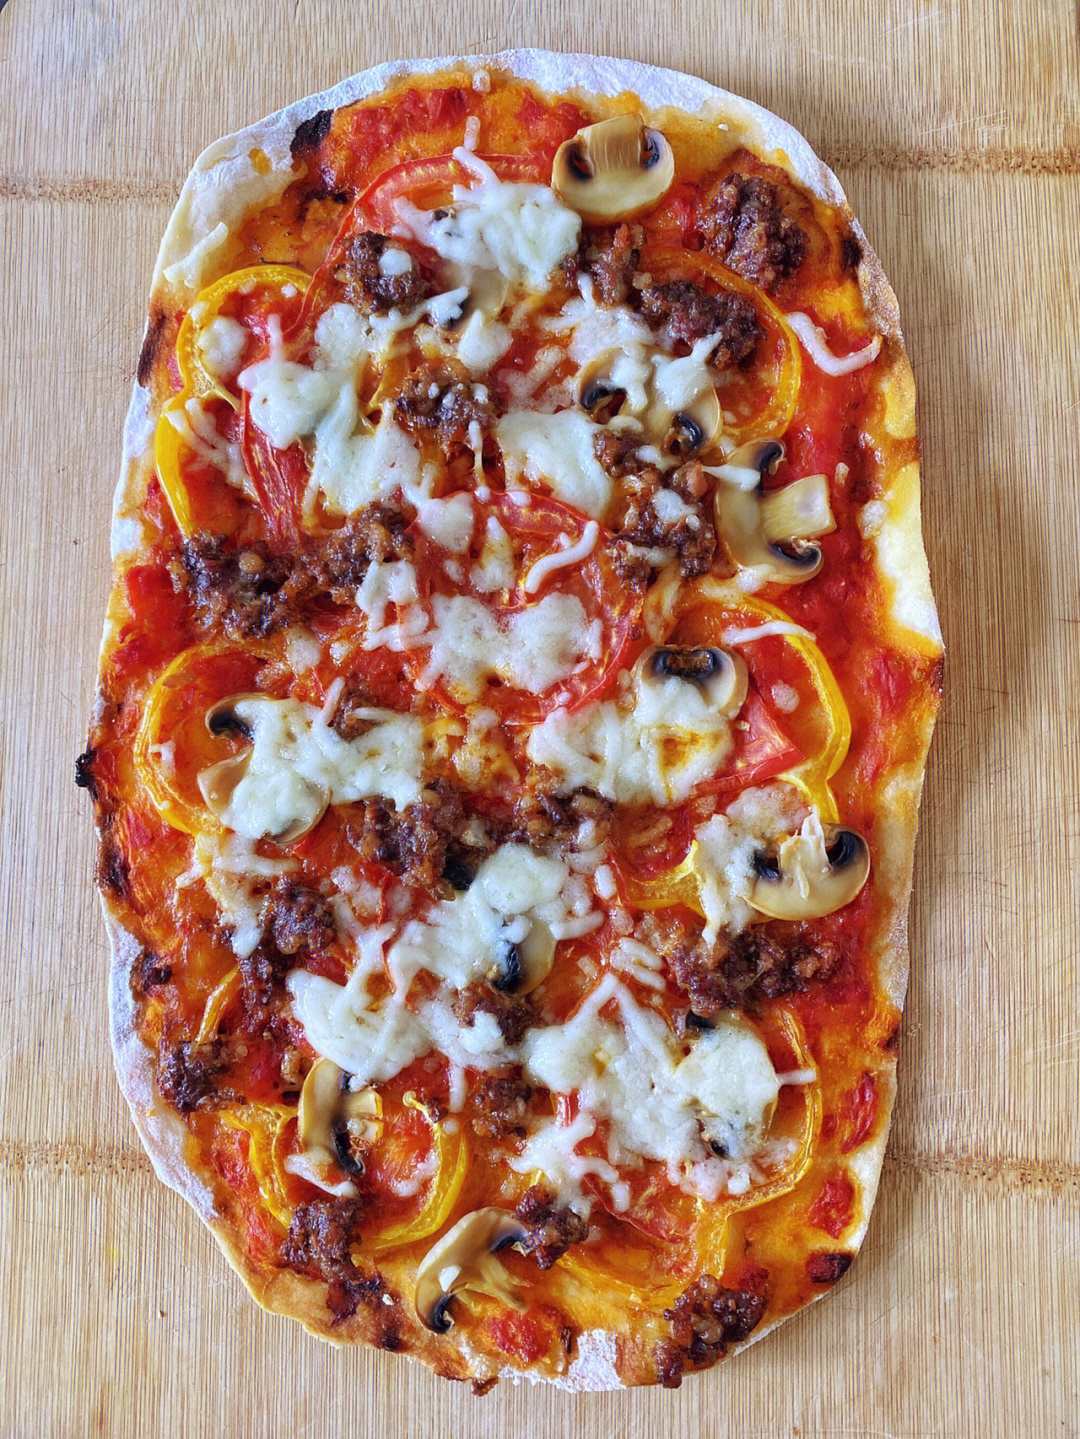 naplespizza那不勒斯披萨回忆米其林披萨